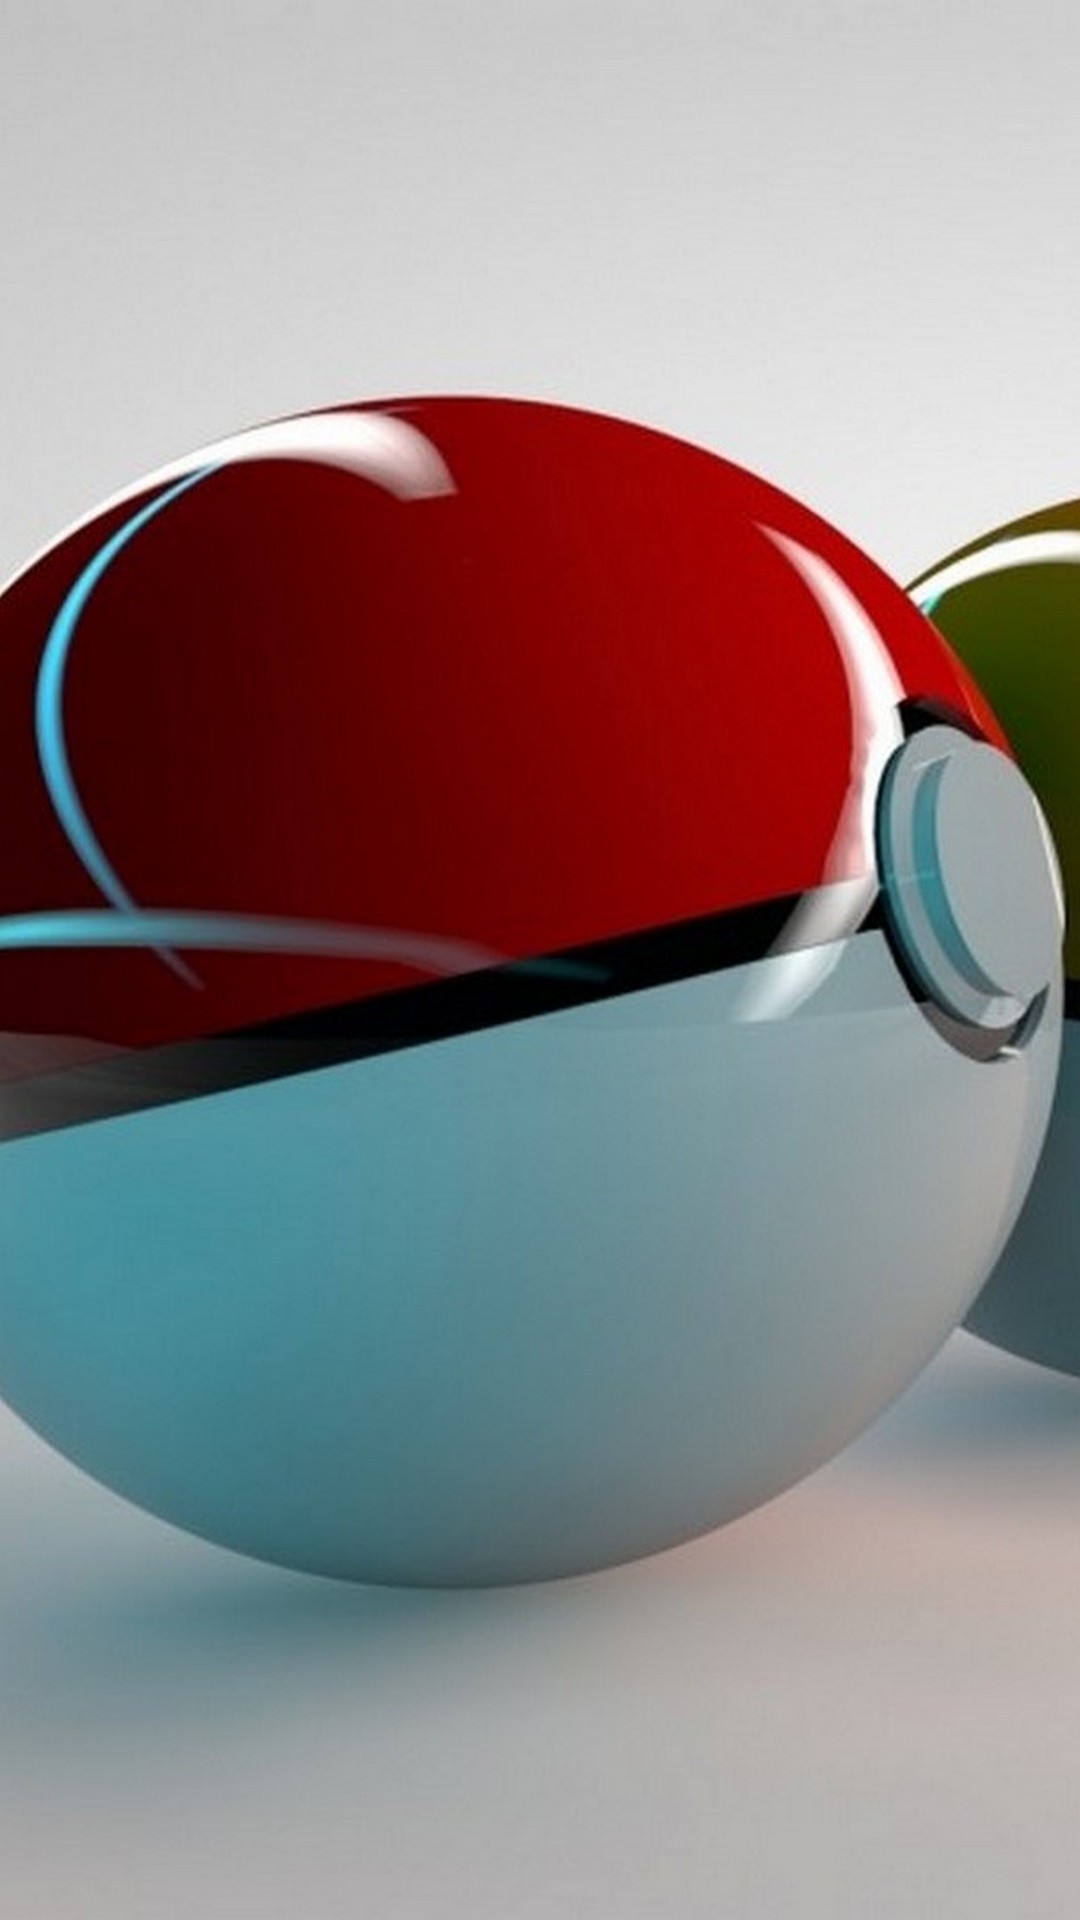 3D Pokemon Ball Wallpaper Android